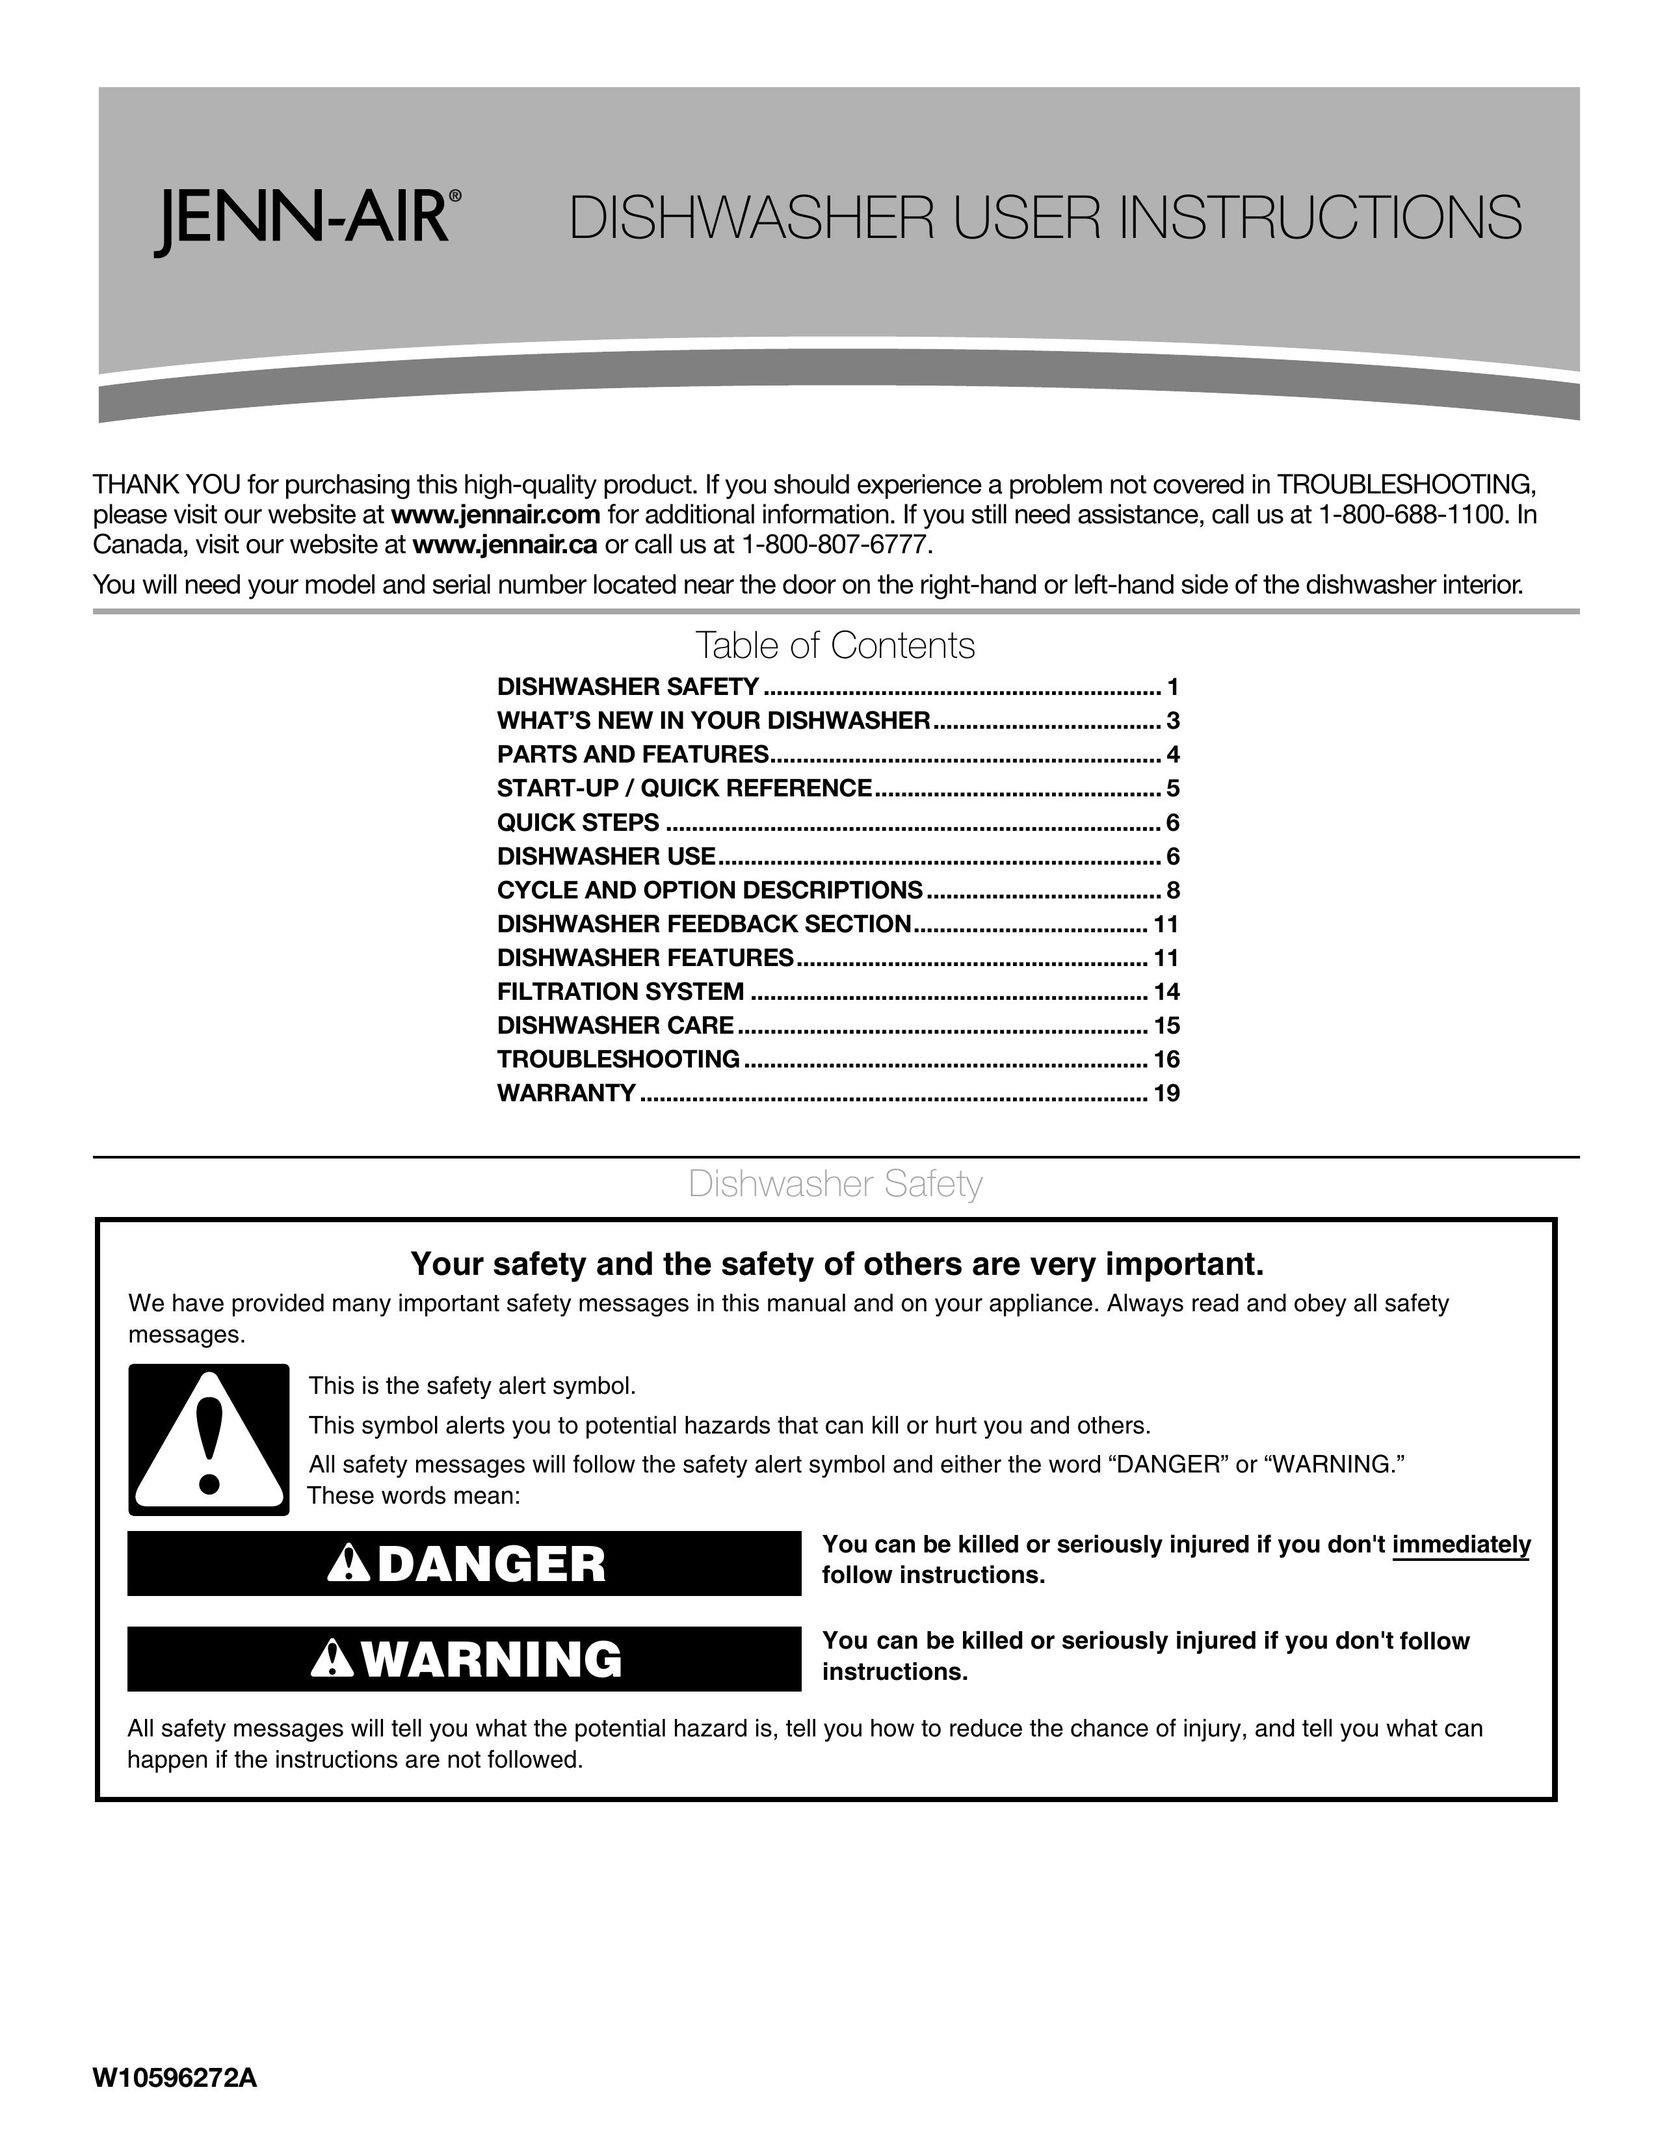 Jenn-Air W10596272A Dishwasher User Manual